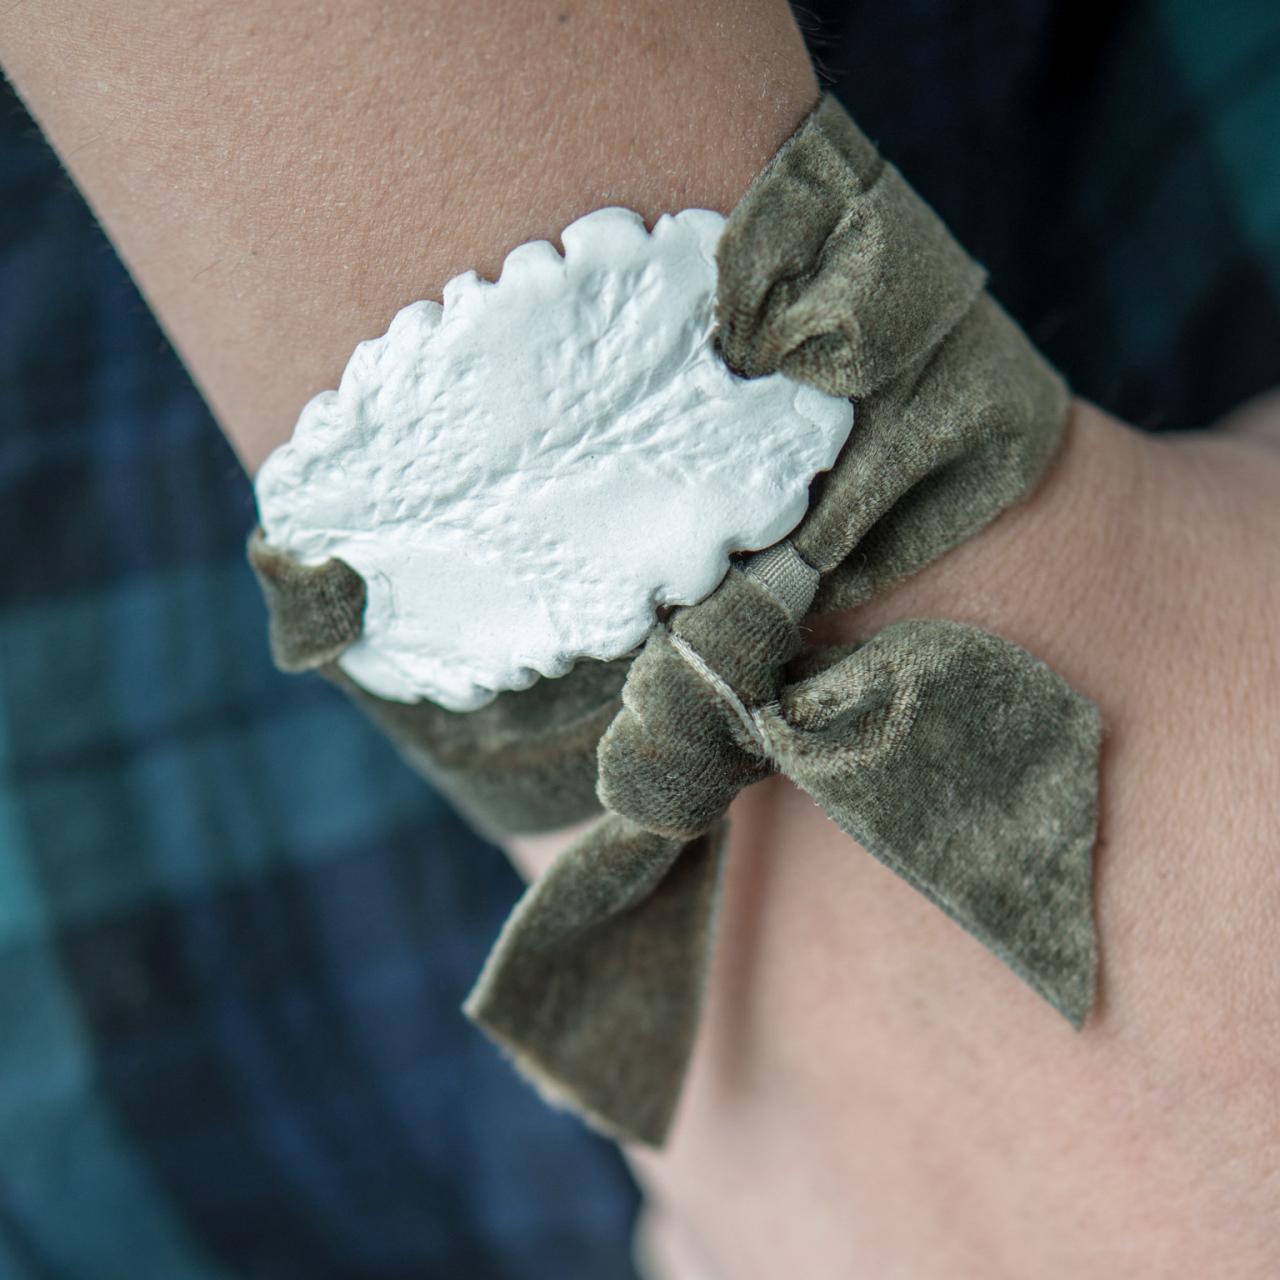 Party Favor Bracelet Kit Personalized DIY Clay Bracelet Kit Make